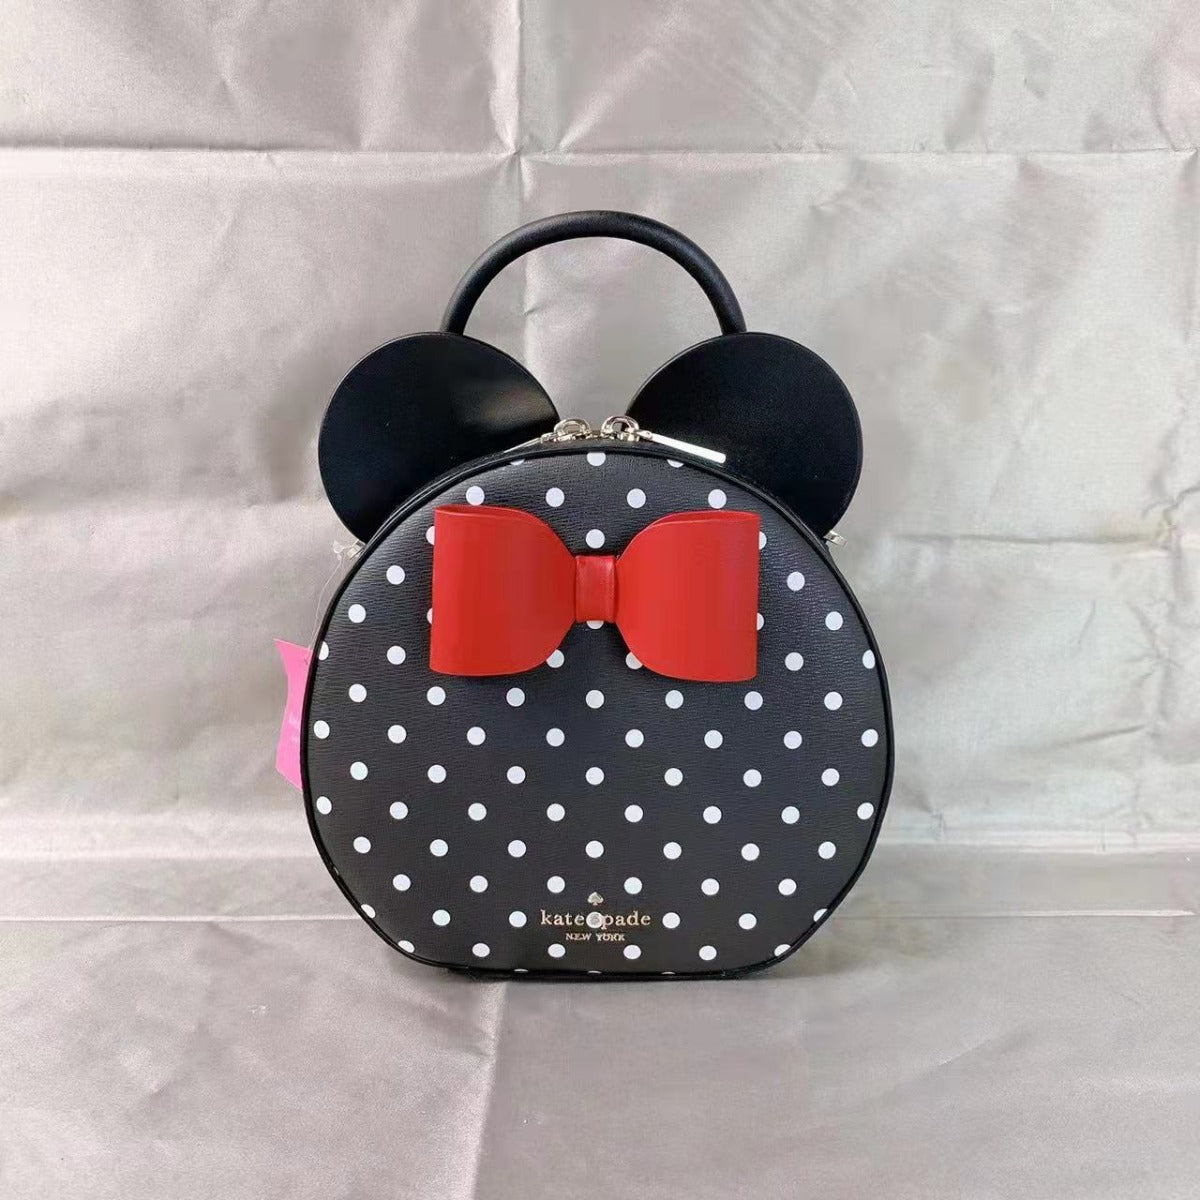 Kate Spade K4641 disney x new york minnie mouse crossbody bag in BLACK MULTI 767883263280